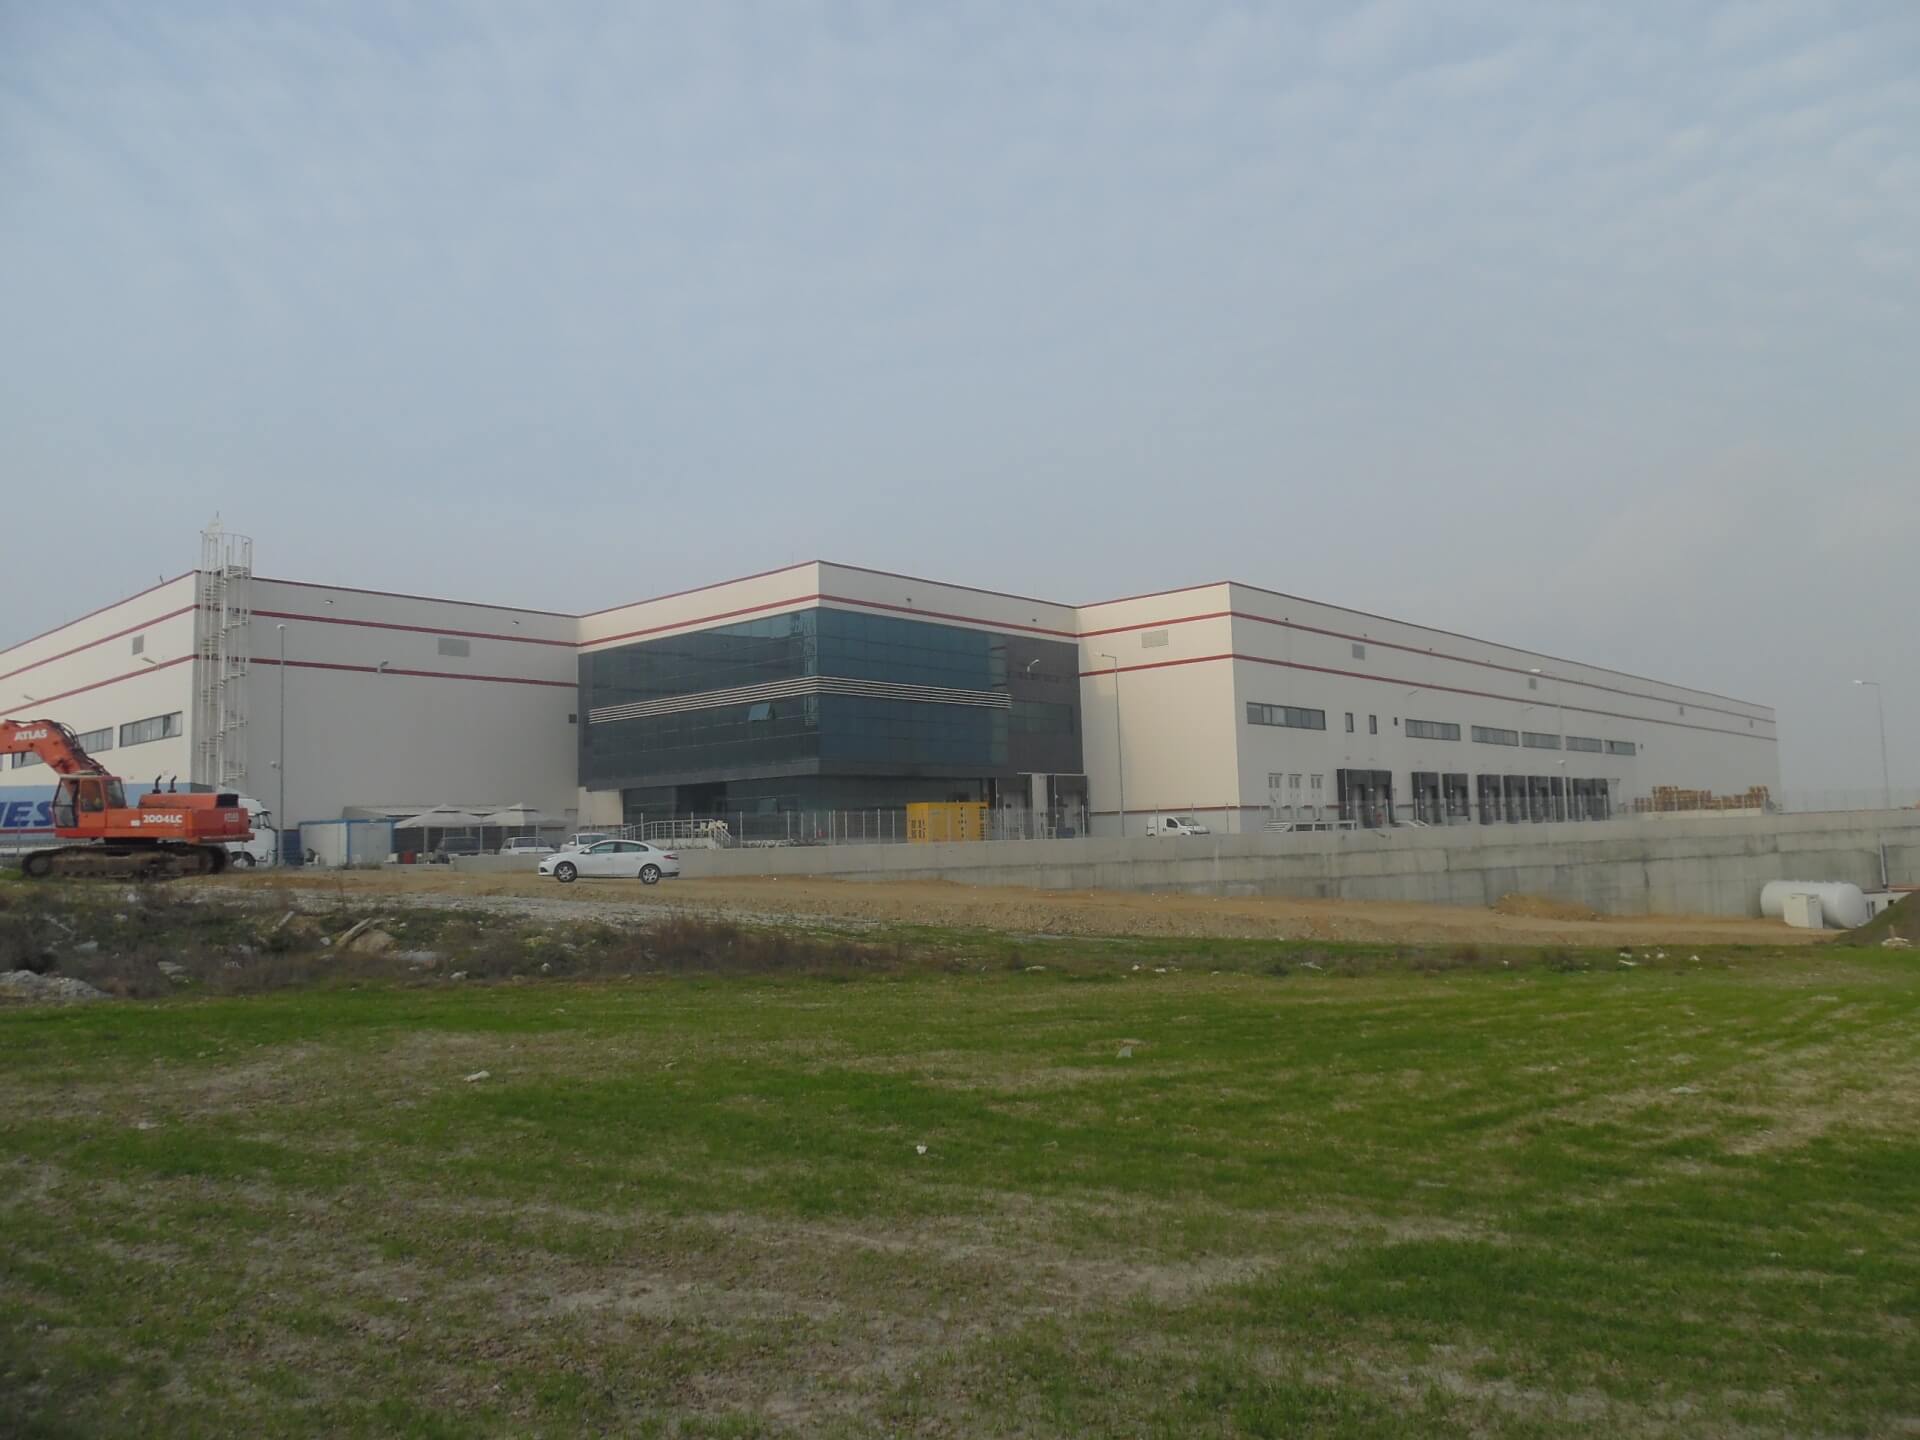 Esenyurt Logistic Center